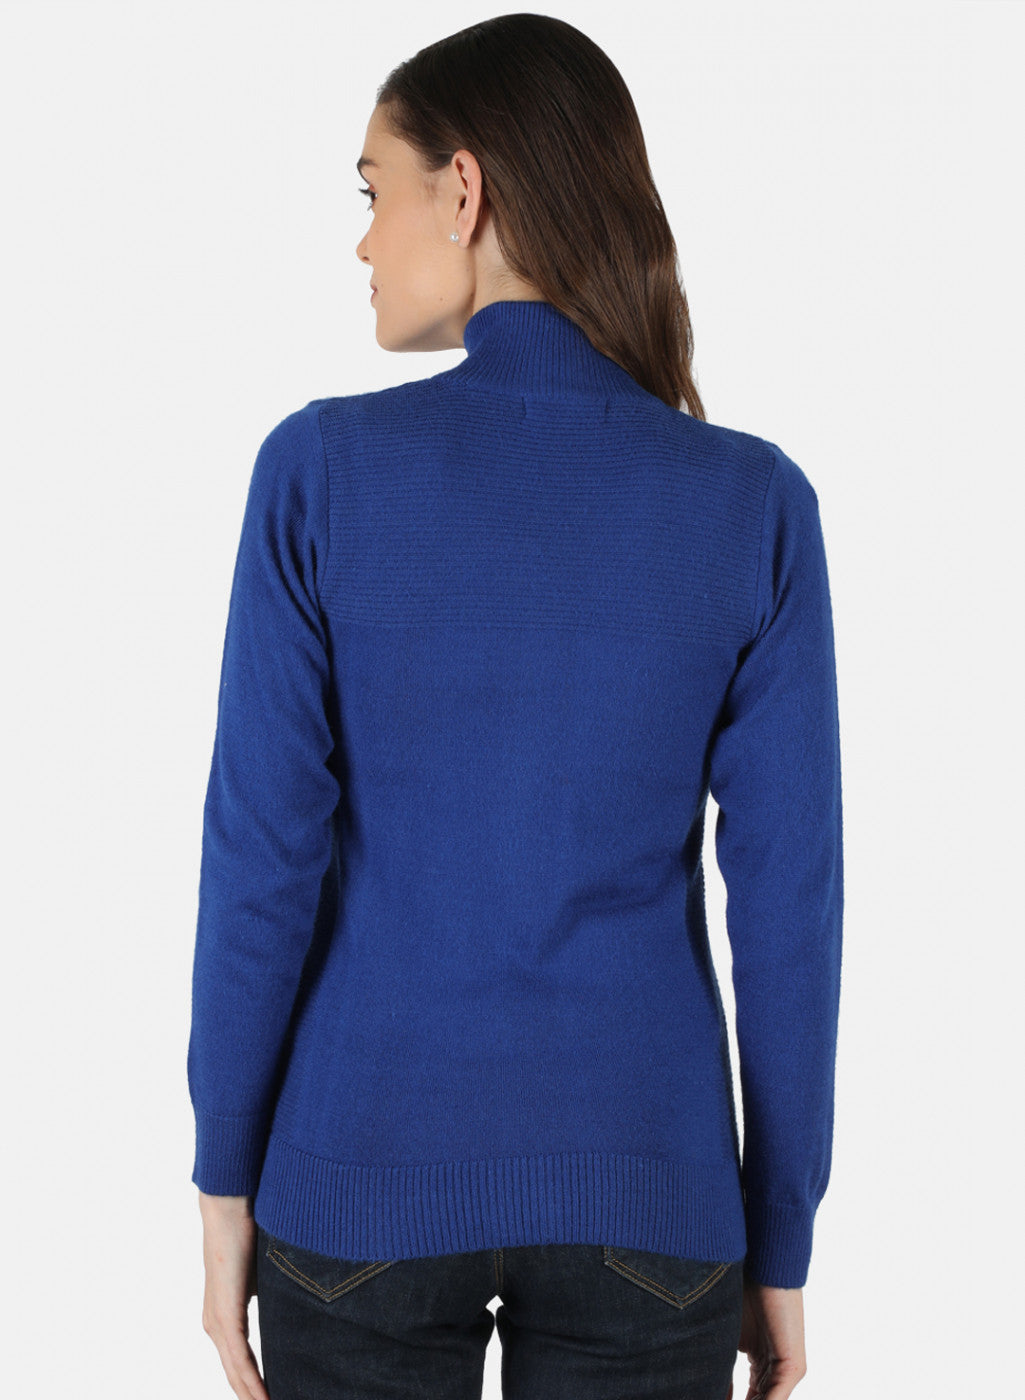 Women Blue Solid Cardigan